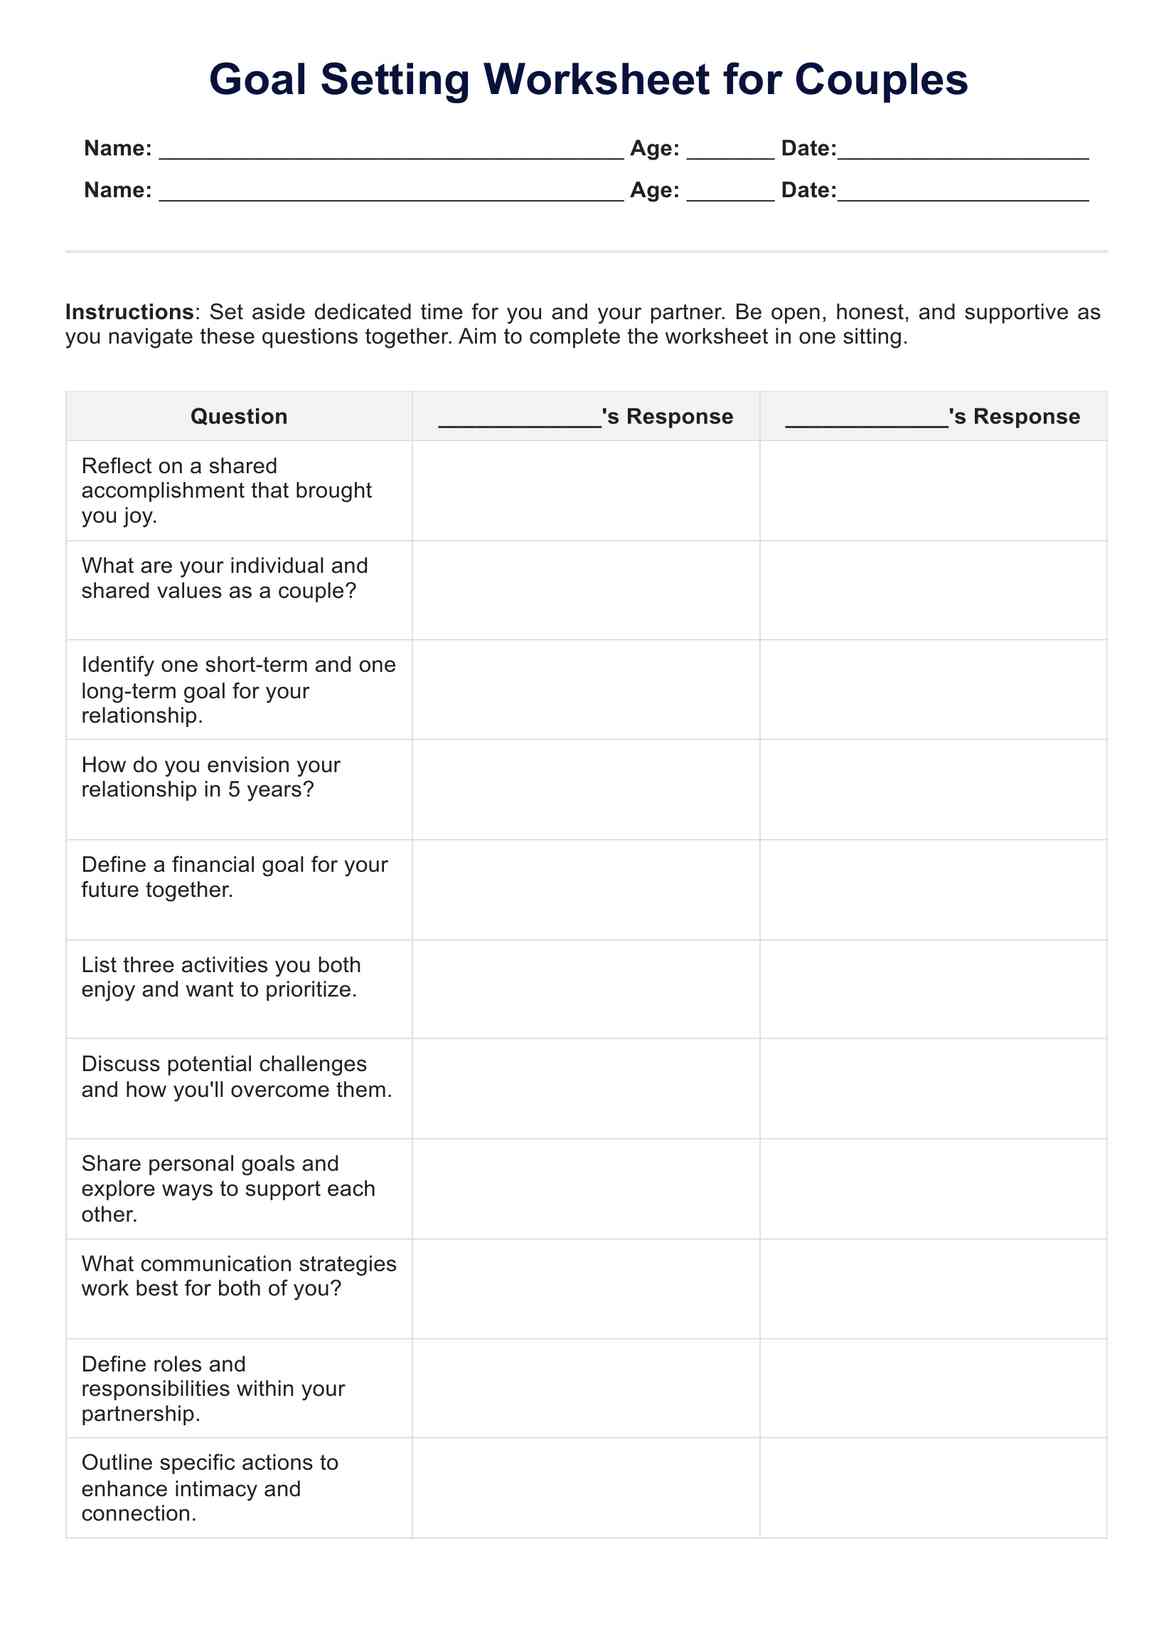 Goal Setting for Couples Worksheet PDF Example